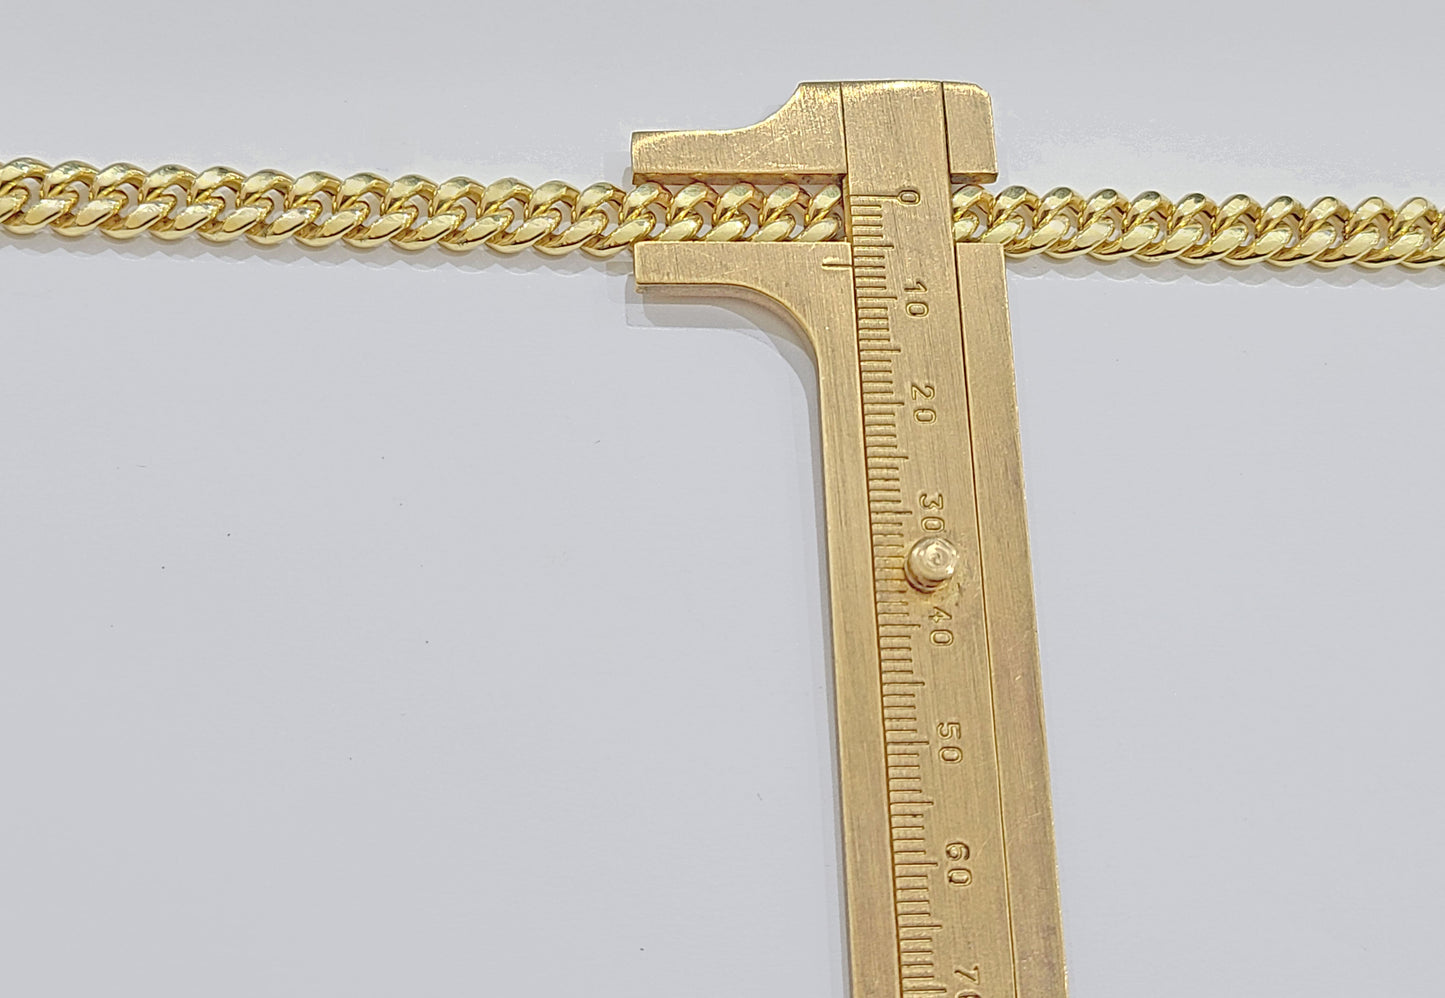 Real 10k Yellow Gold Miami Cuban Link Bracelet 8" inch 7mm 10kt Box Lock Men